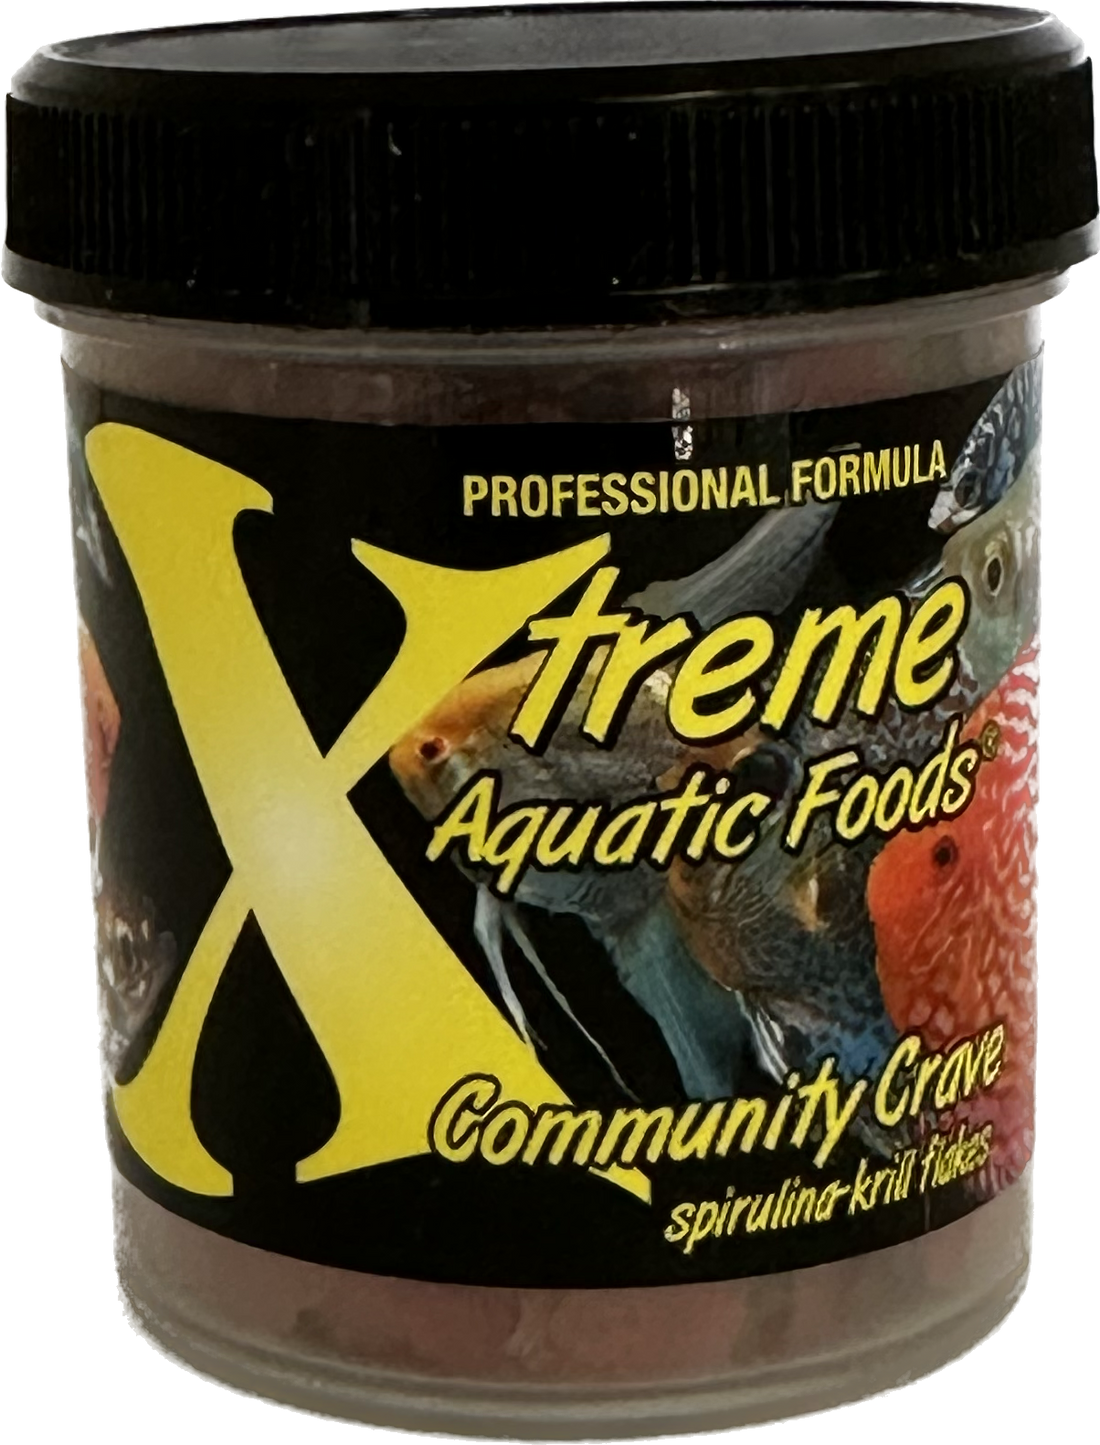 Xtreme Aquatic Foods Community Crave Flakes